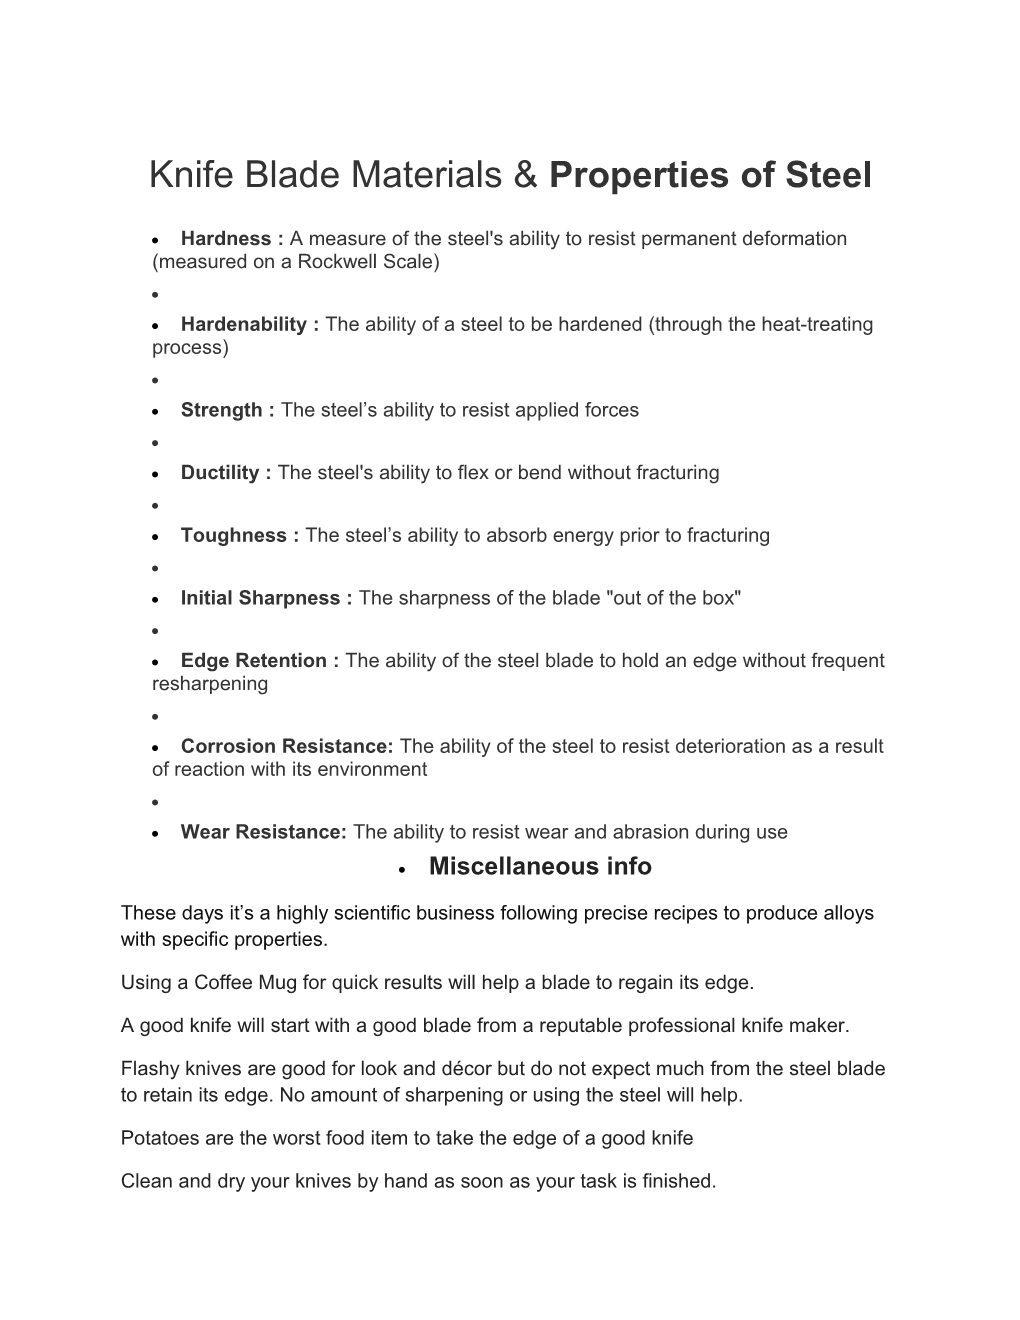 Knife Blade Materials Properties of Steel